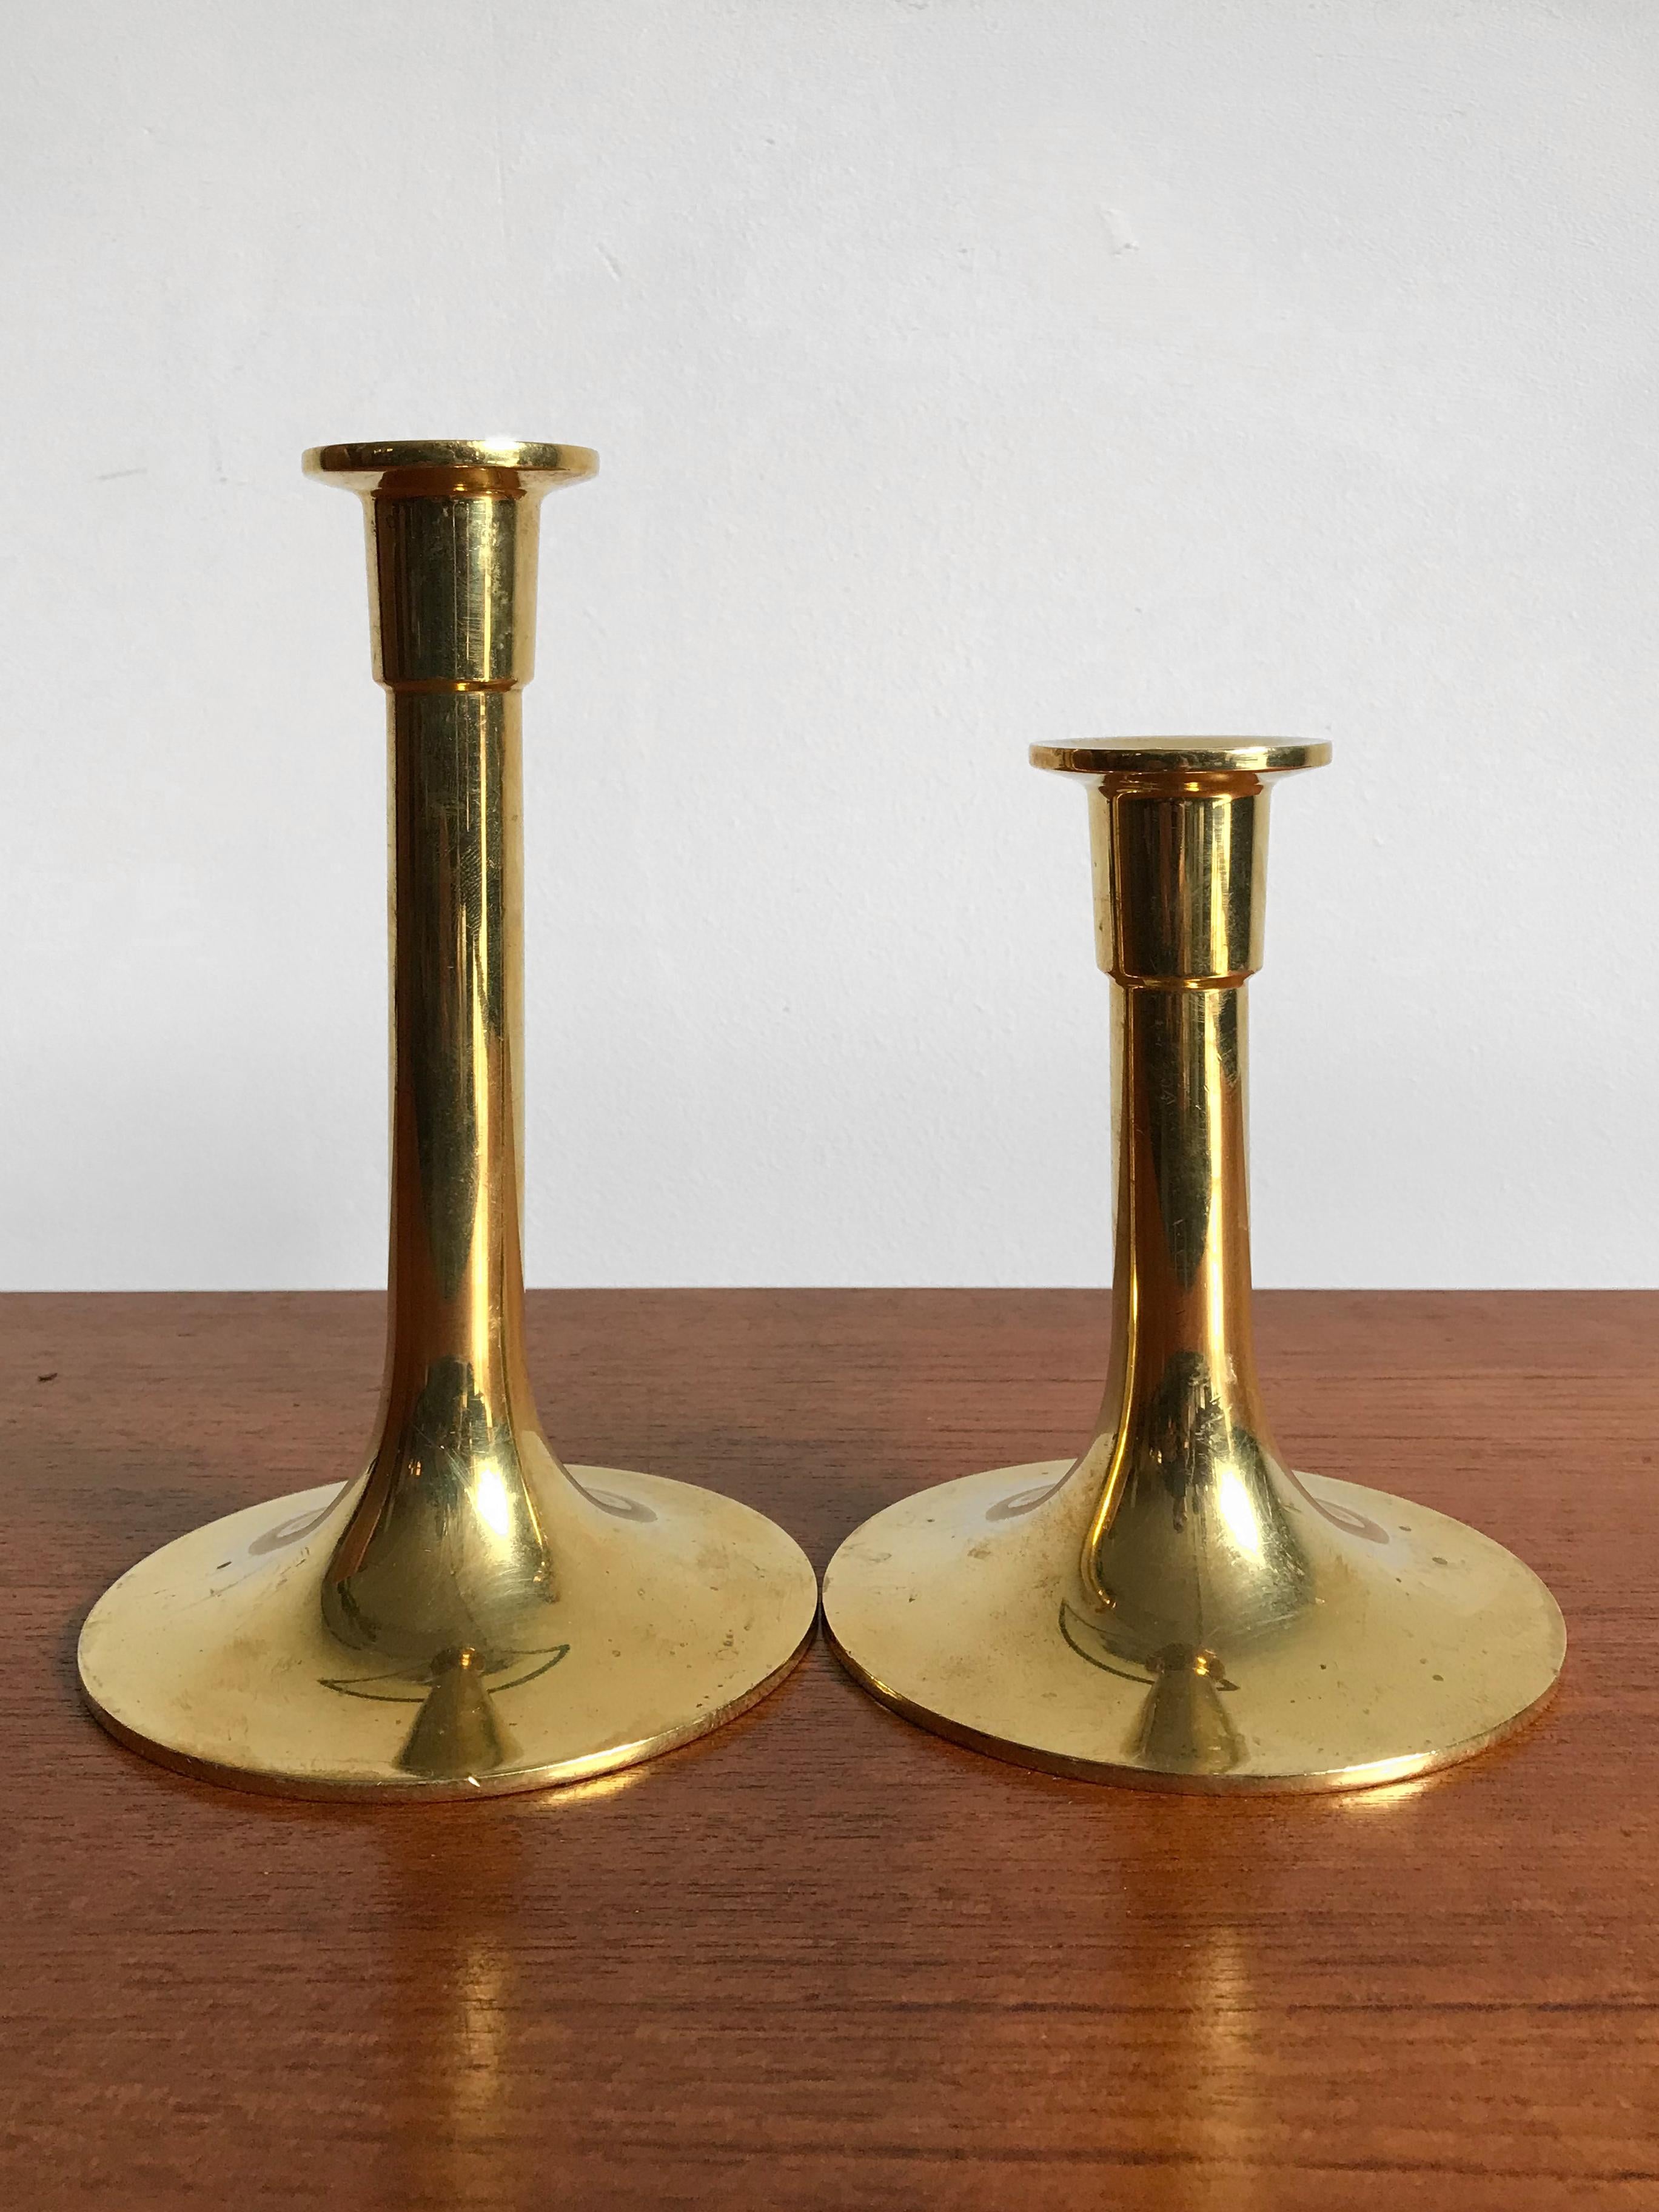 1950s set brass Danish Mid-Century Modern candleholders.
Dimensions from left:
Height 19 cm - diameter 10 cm
Height 14 cm - diameter 10 cm.